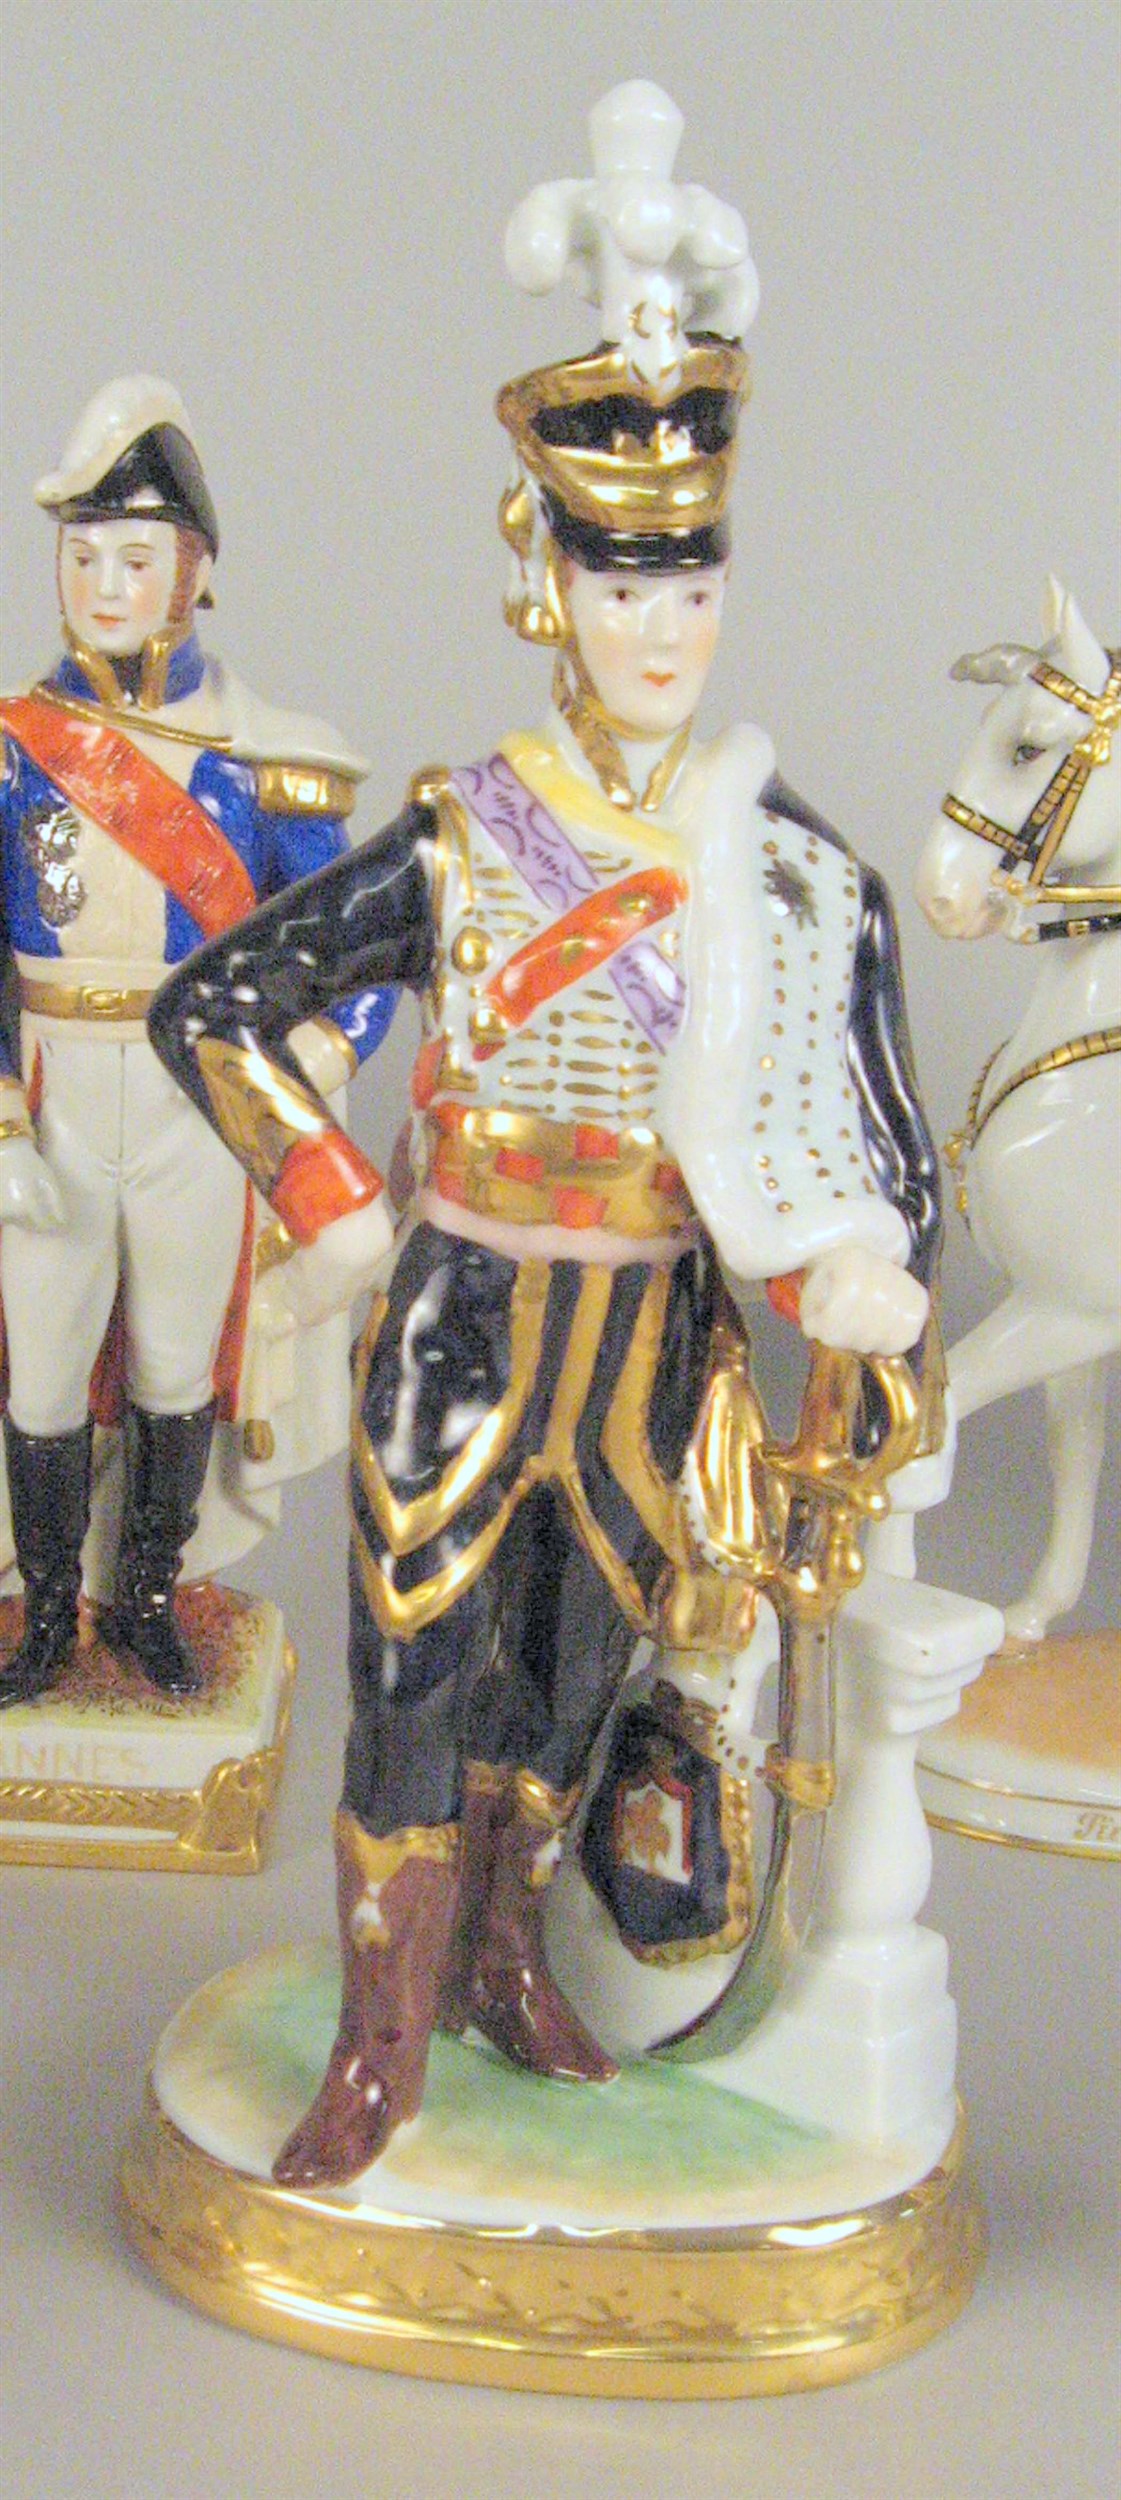 Scheibe Alsbach Porzellan KATALOG Figur CATALOG Porcelain Napoleon Soldier 